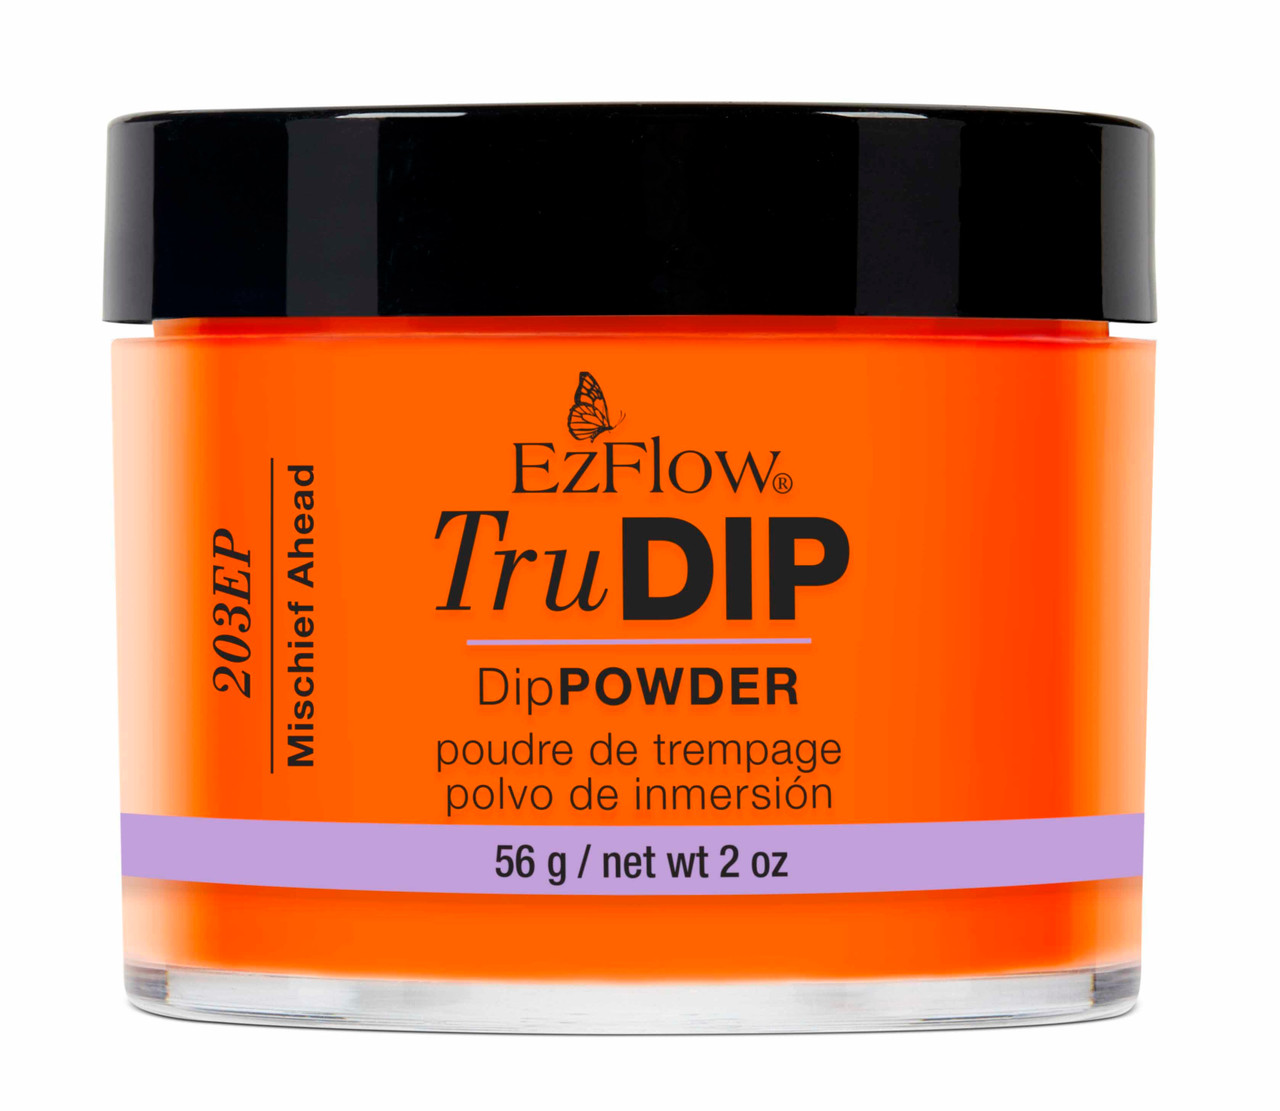 EZ TruDIP Dipping Powder Mischief Ahead  - 2 oz